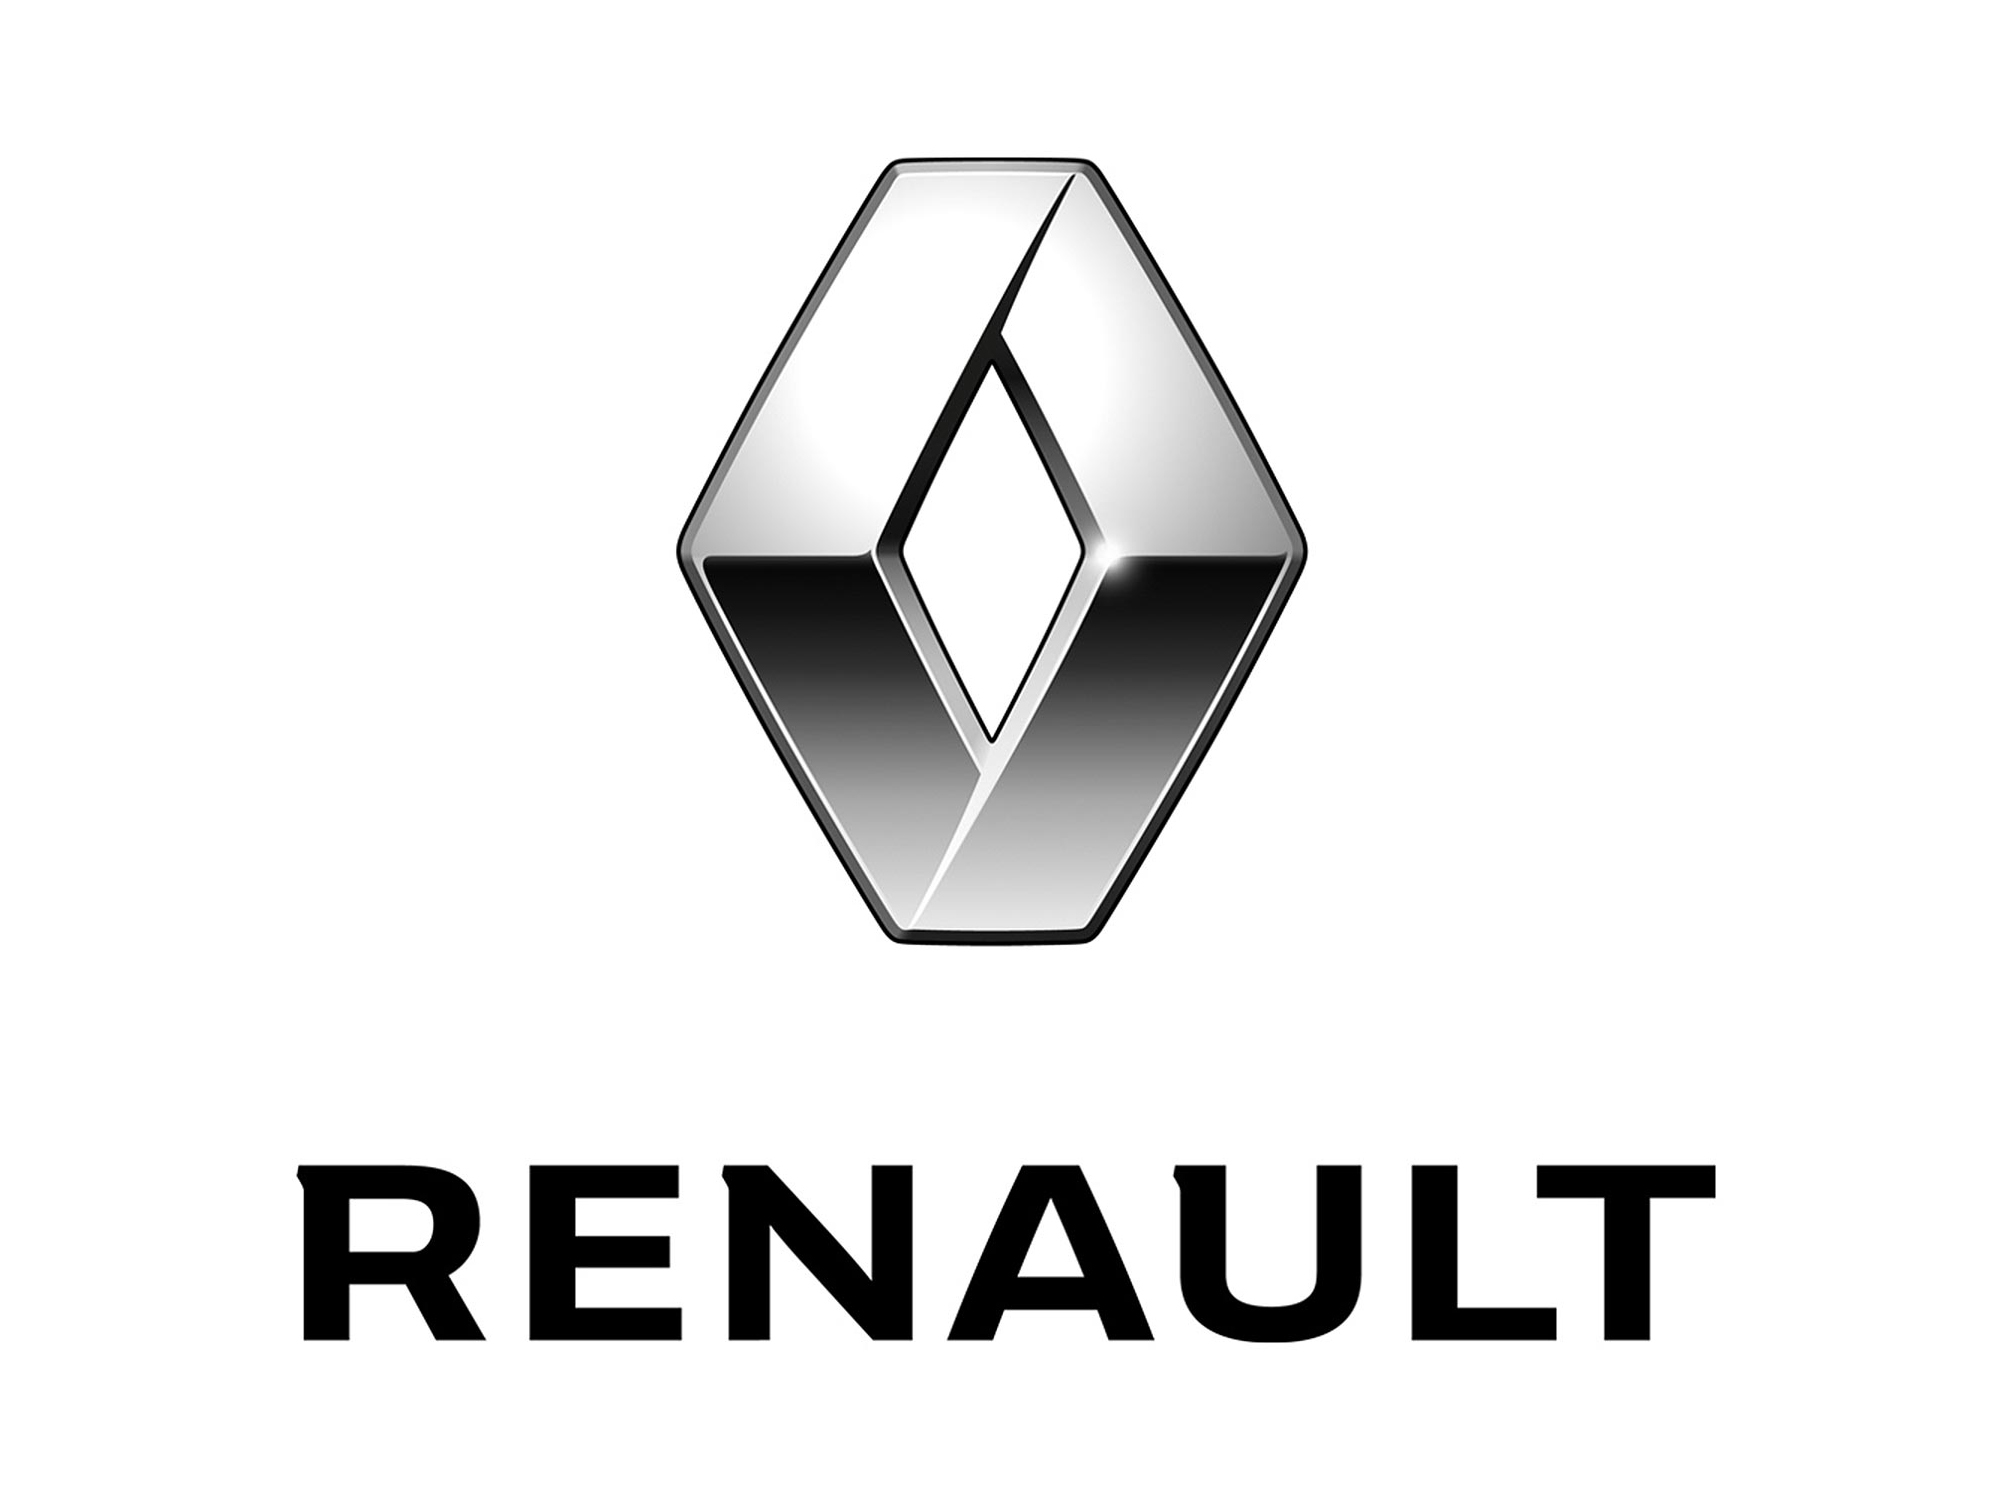 Garage Renault.jpg